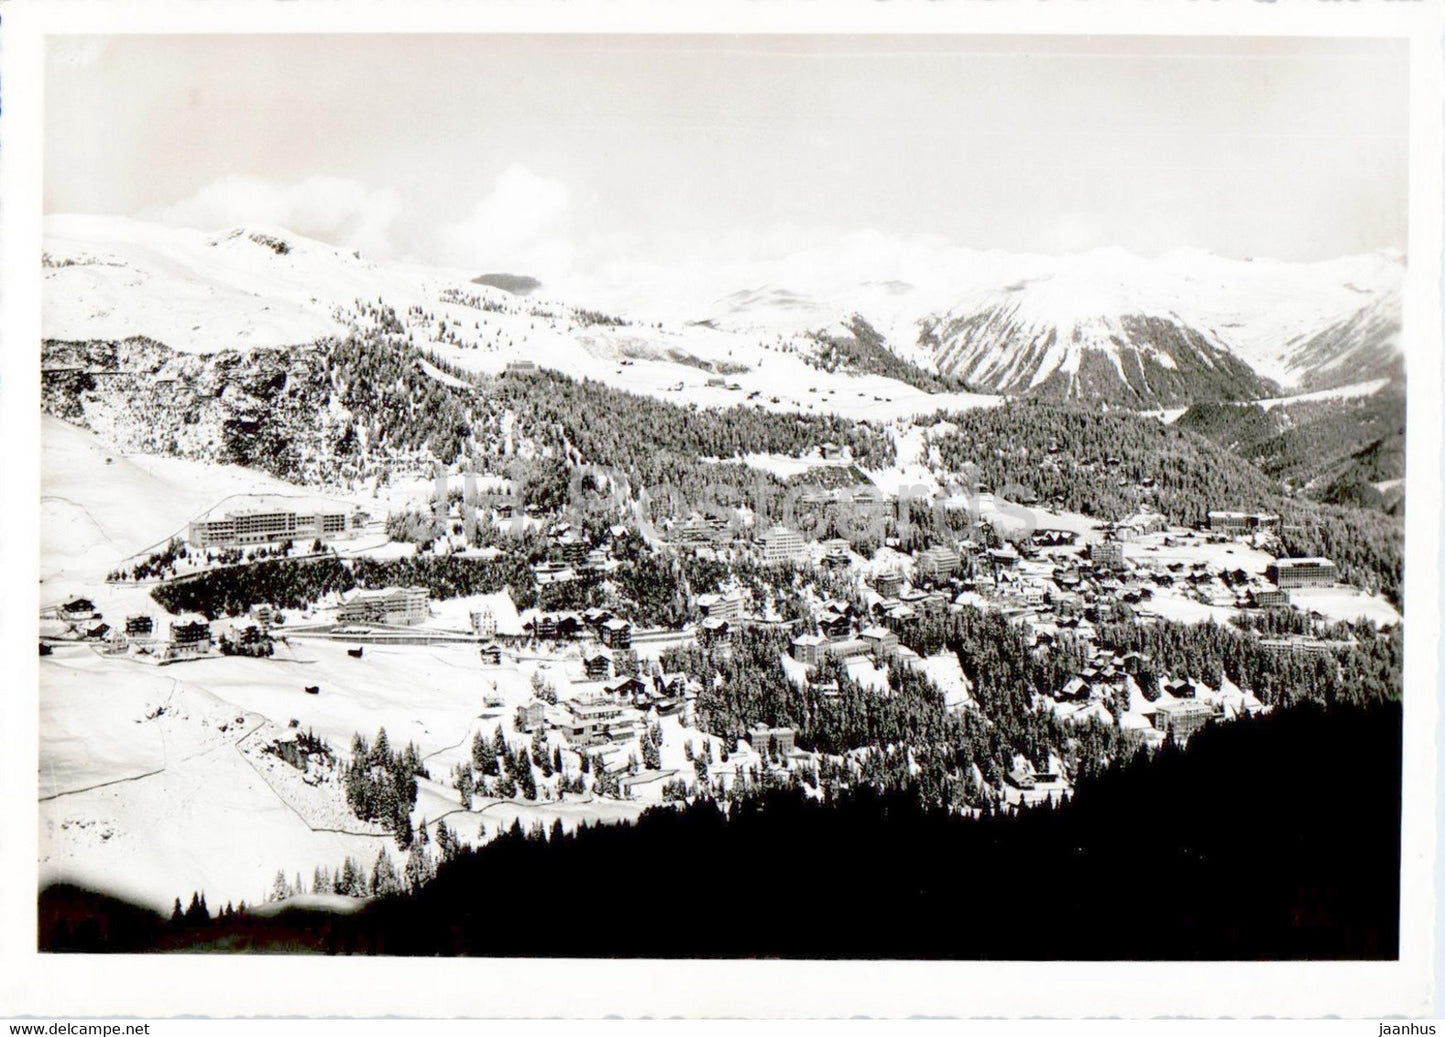 Arosa 1800 m - Gesamtansicht - 650 - old postcard - 1955 - Switzerland - used - JH Postcards